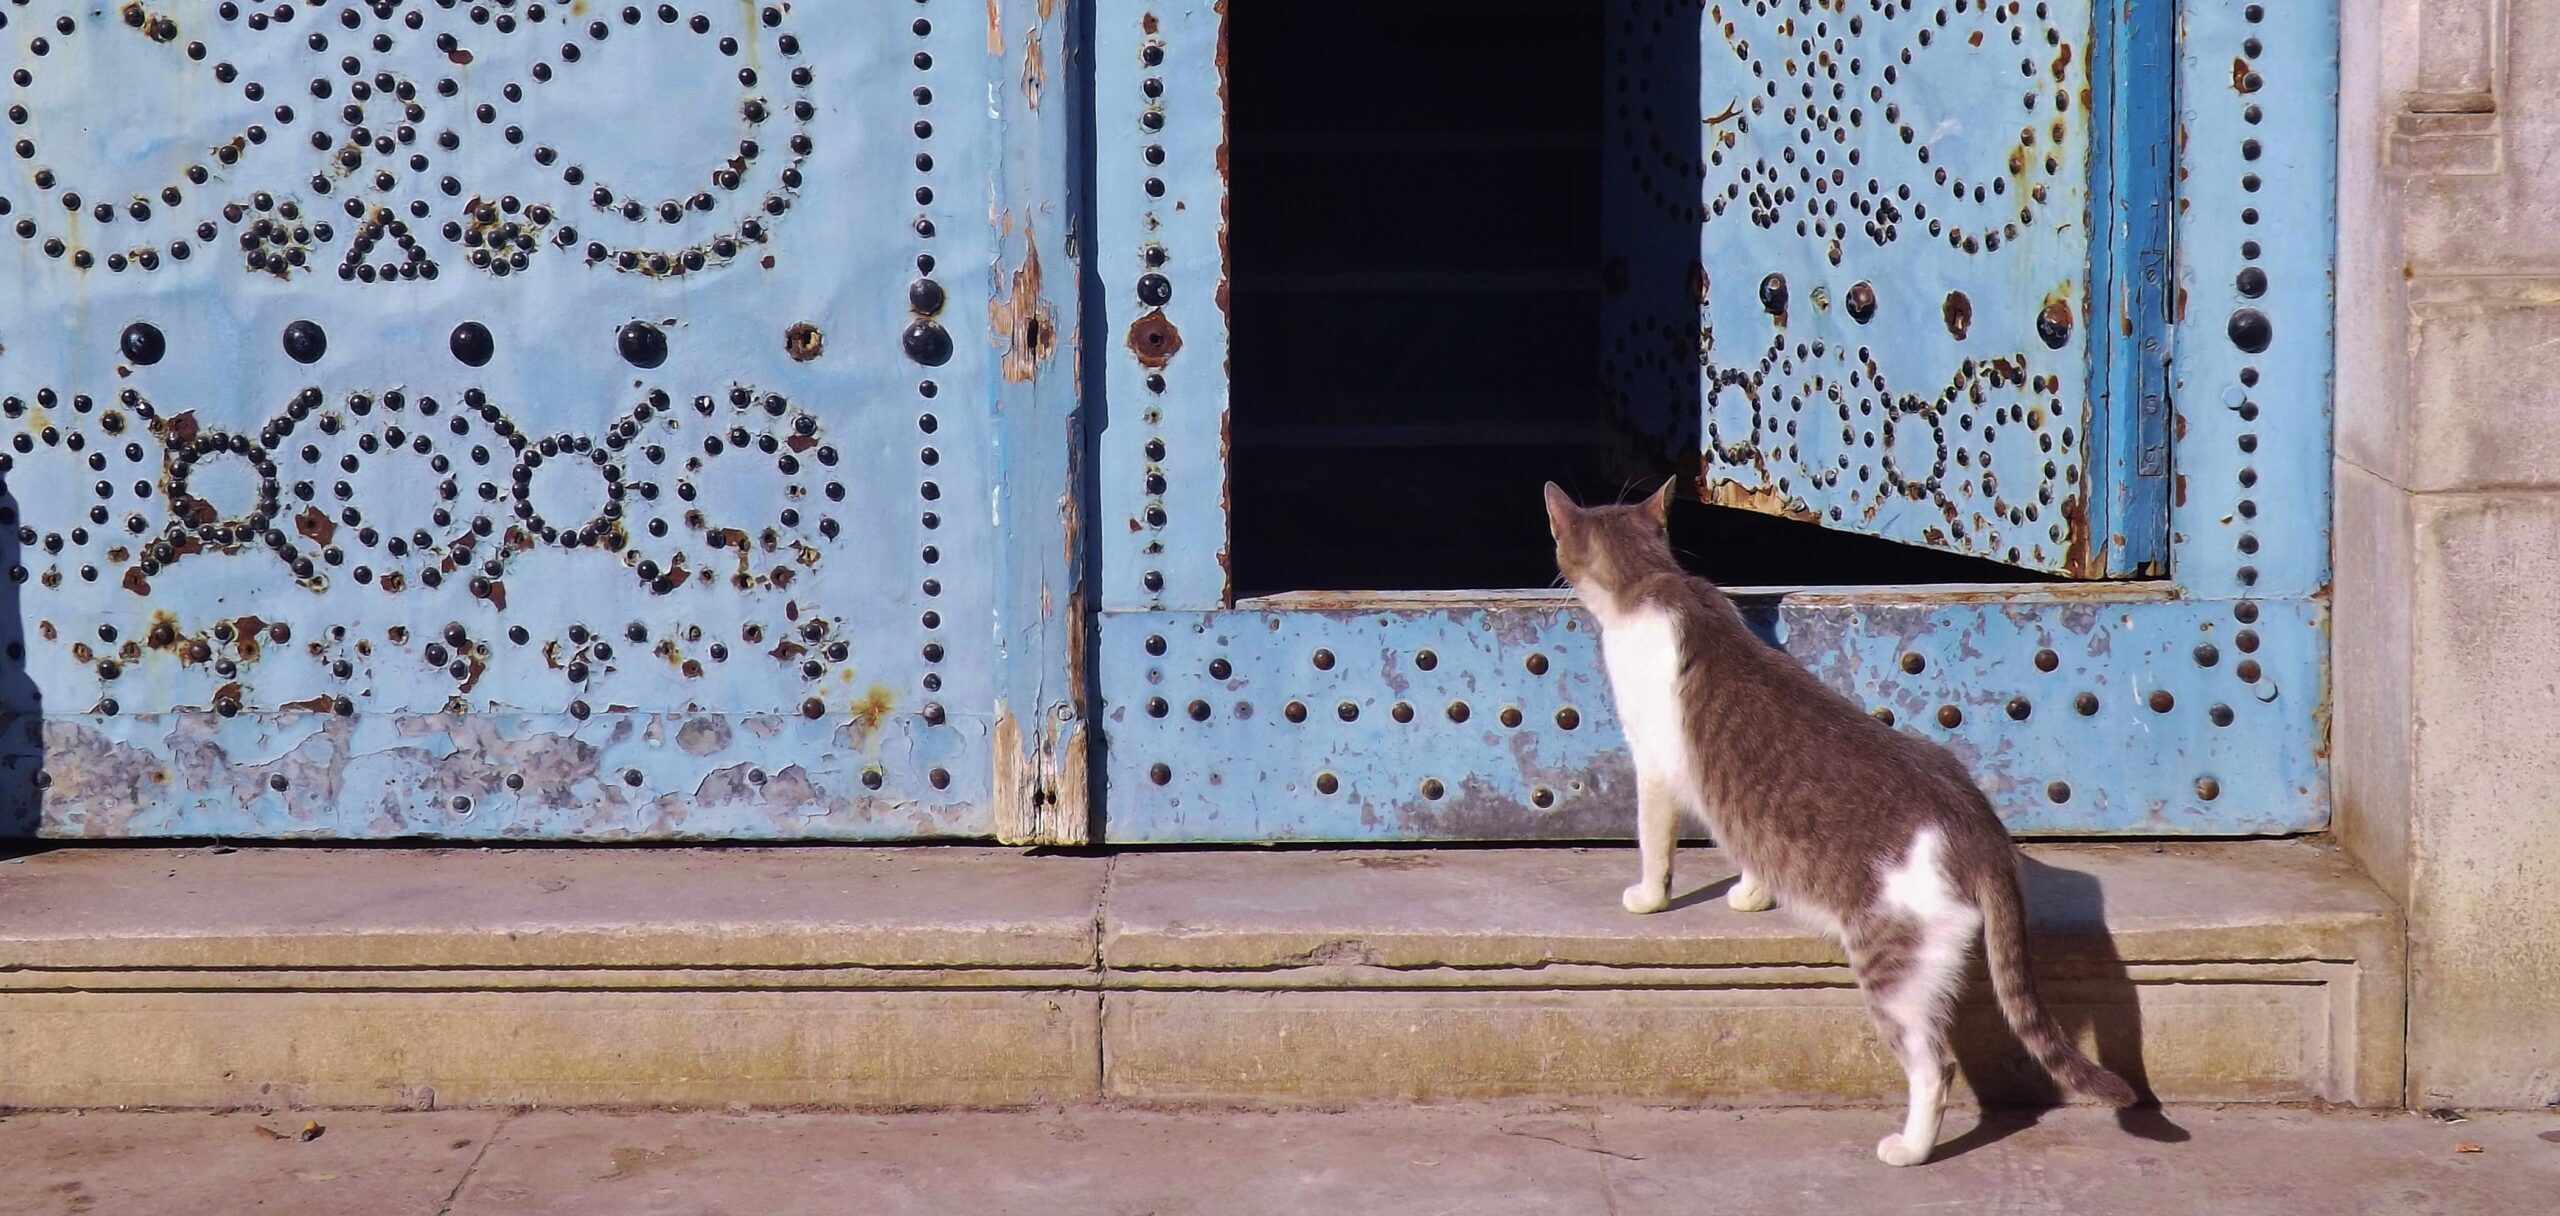 A cat looking through an open door.